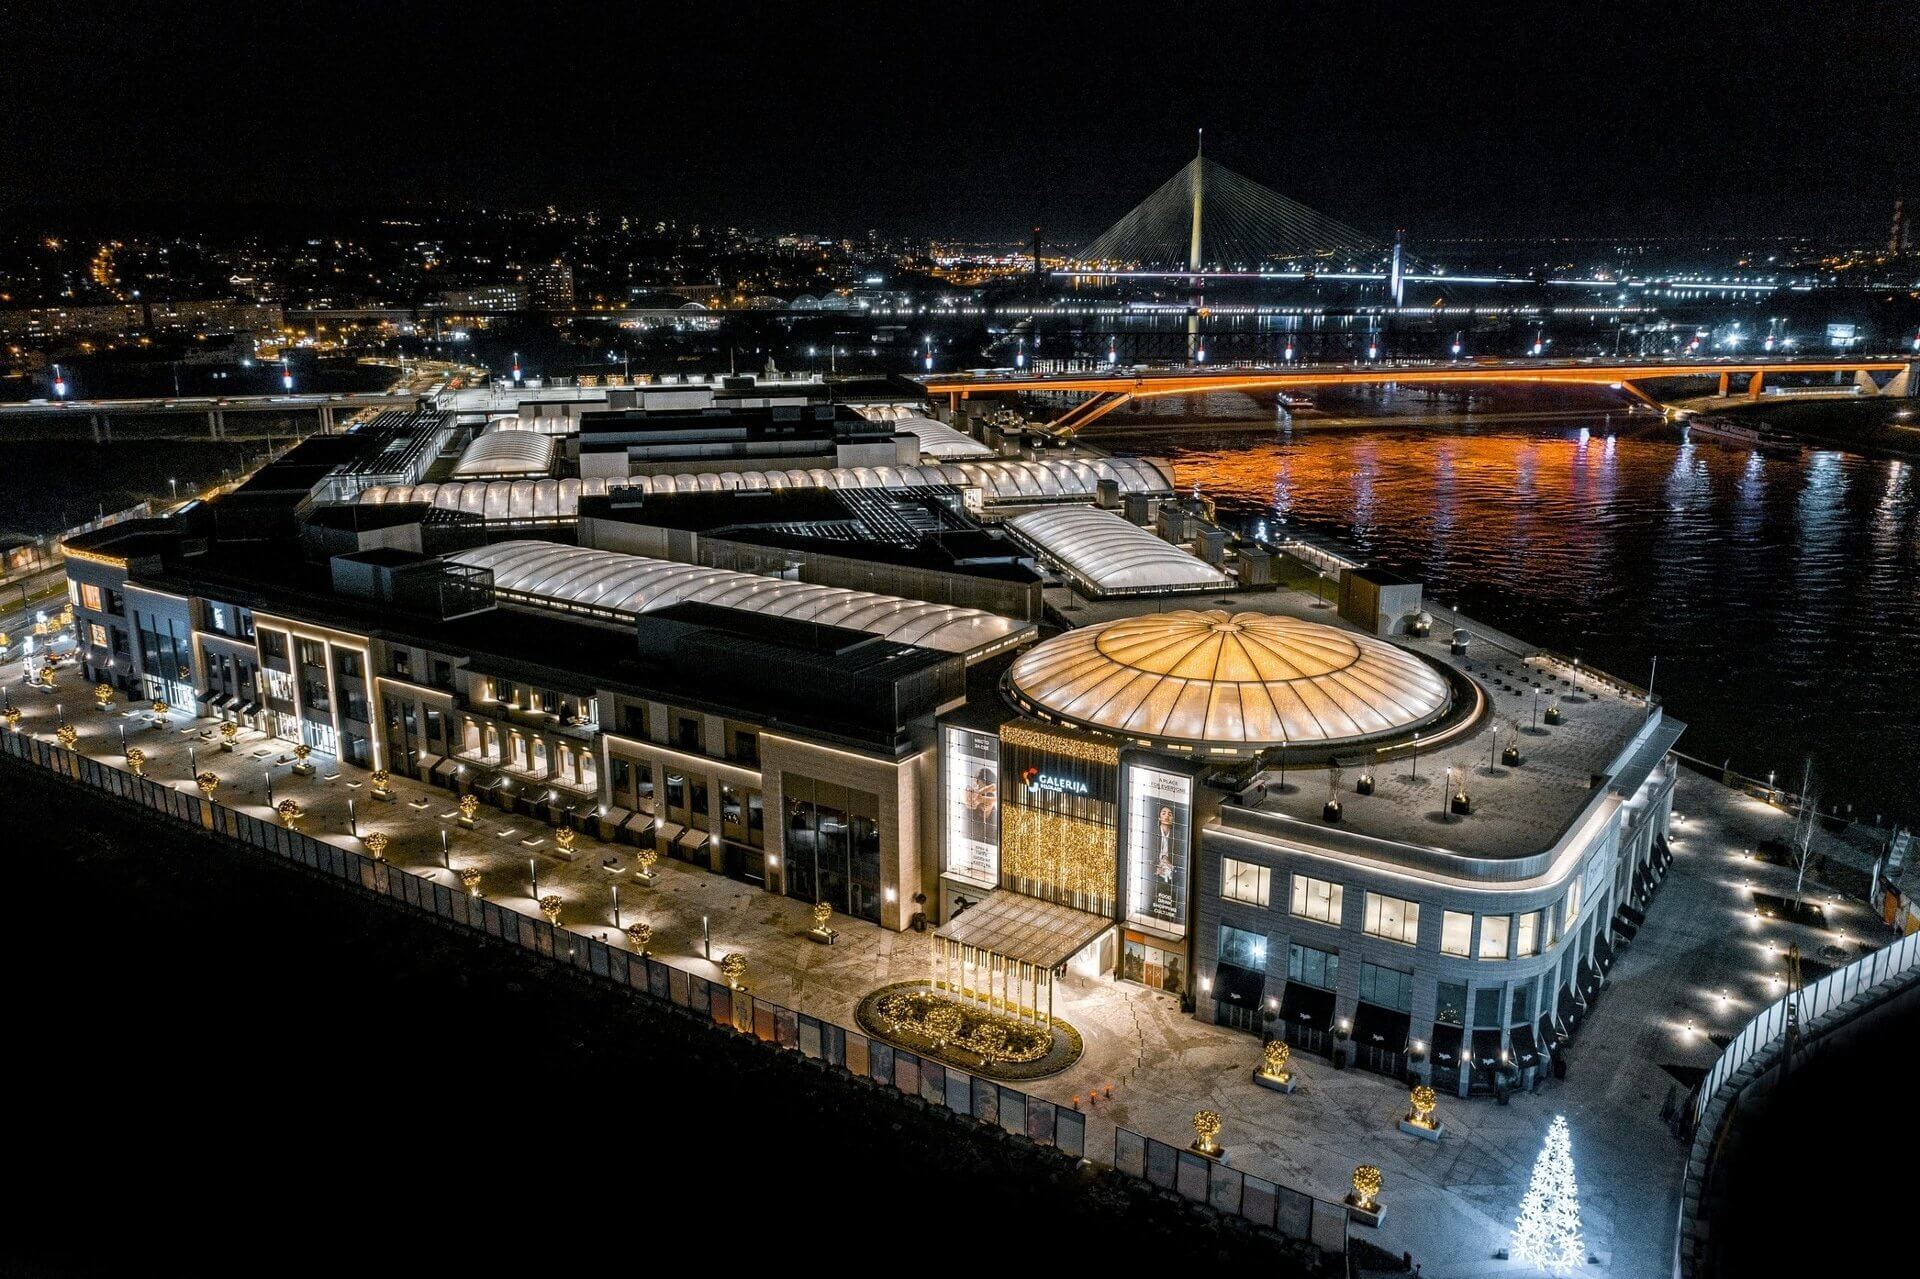 Galerija Belgrade awarded as the best large shopping mall